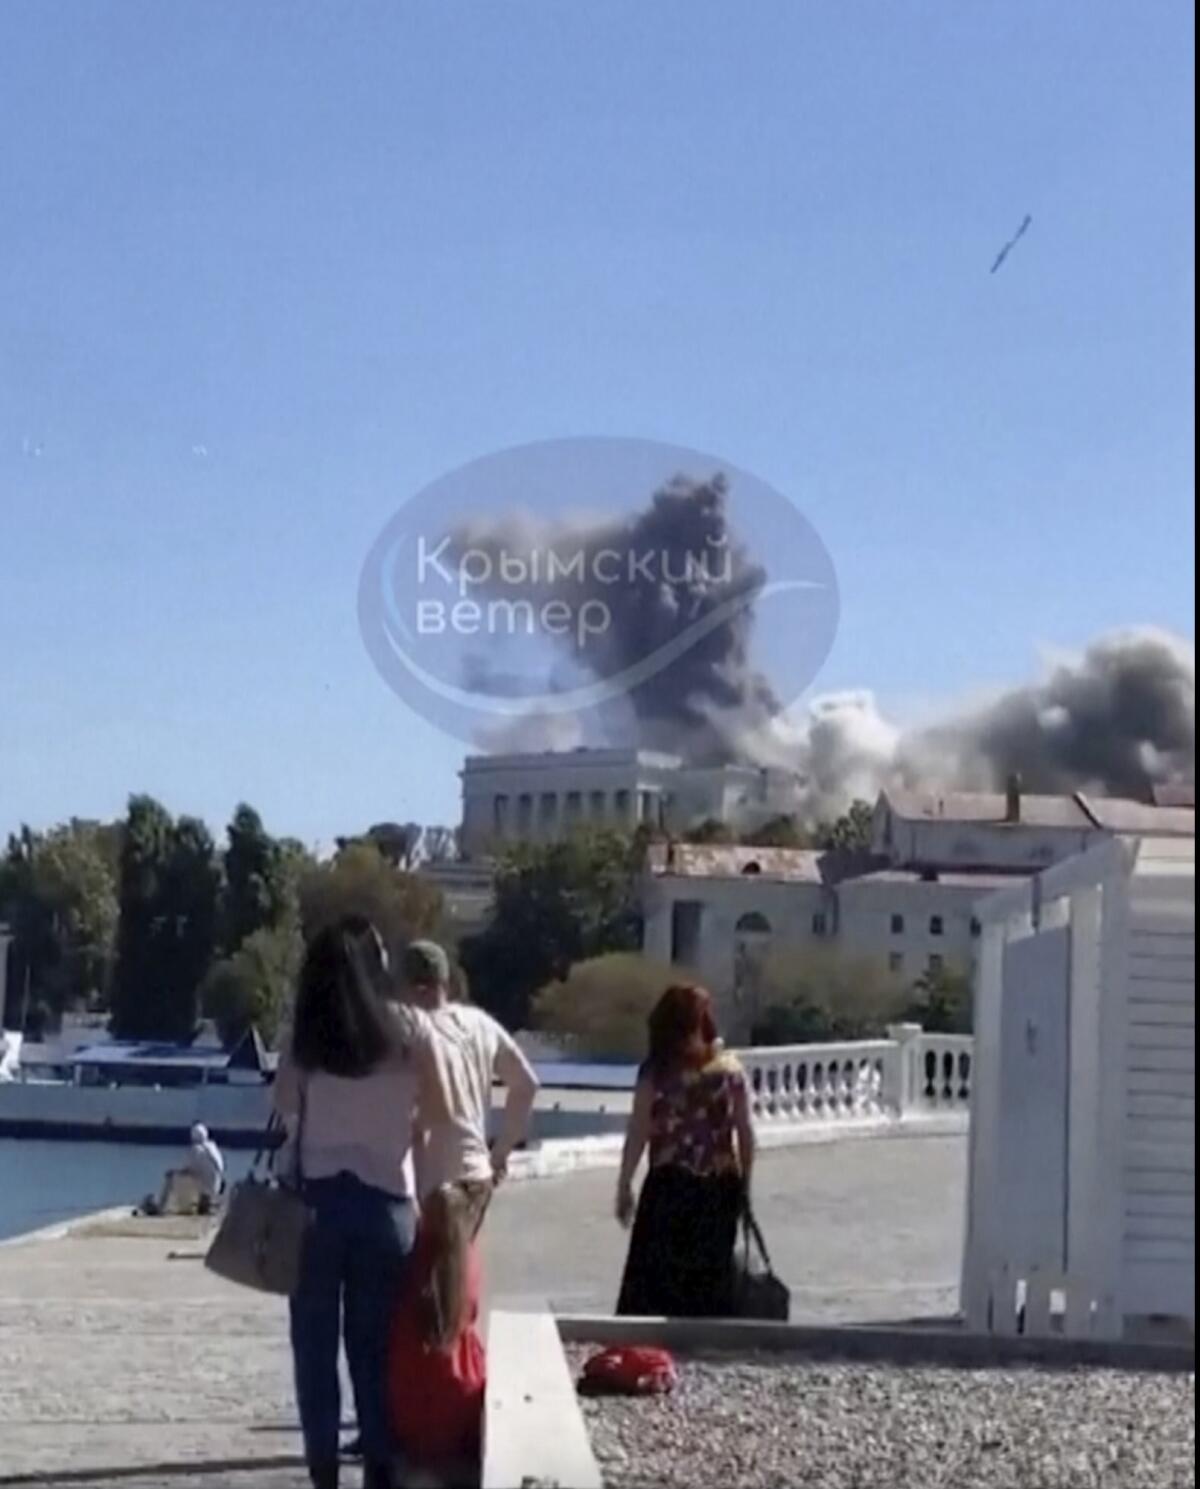 Smoke rises from a building as seaside spectators watch